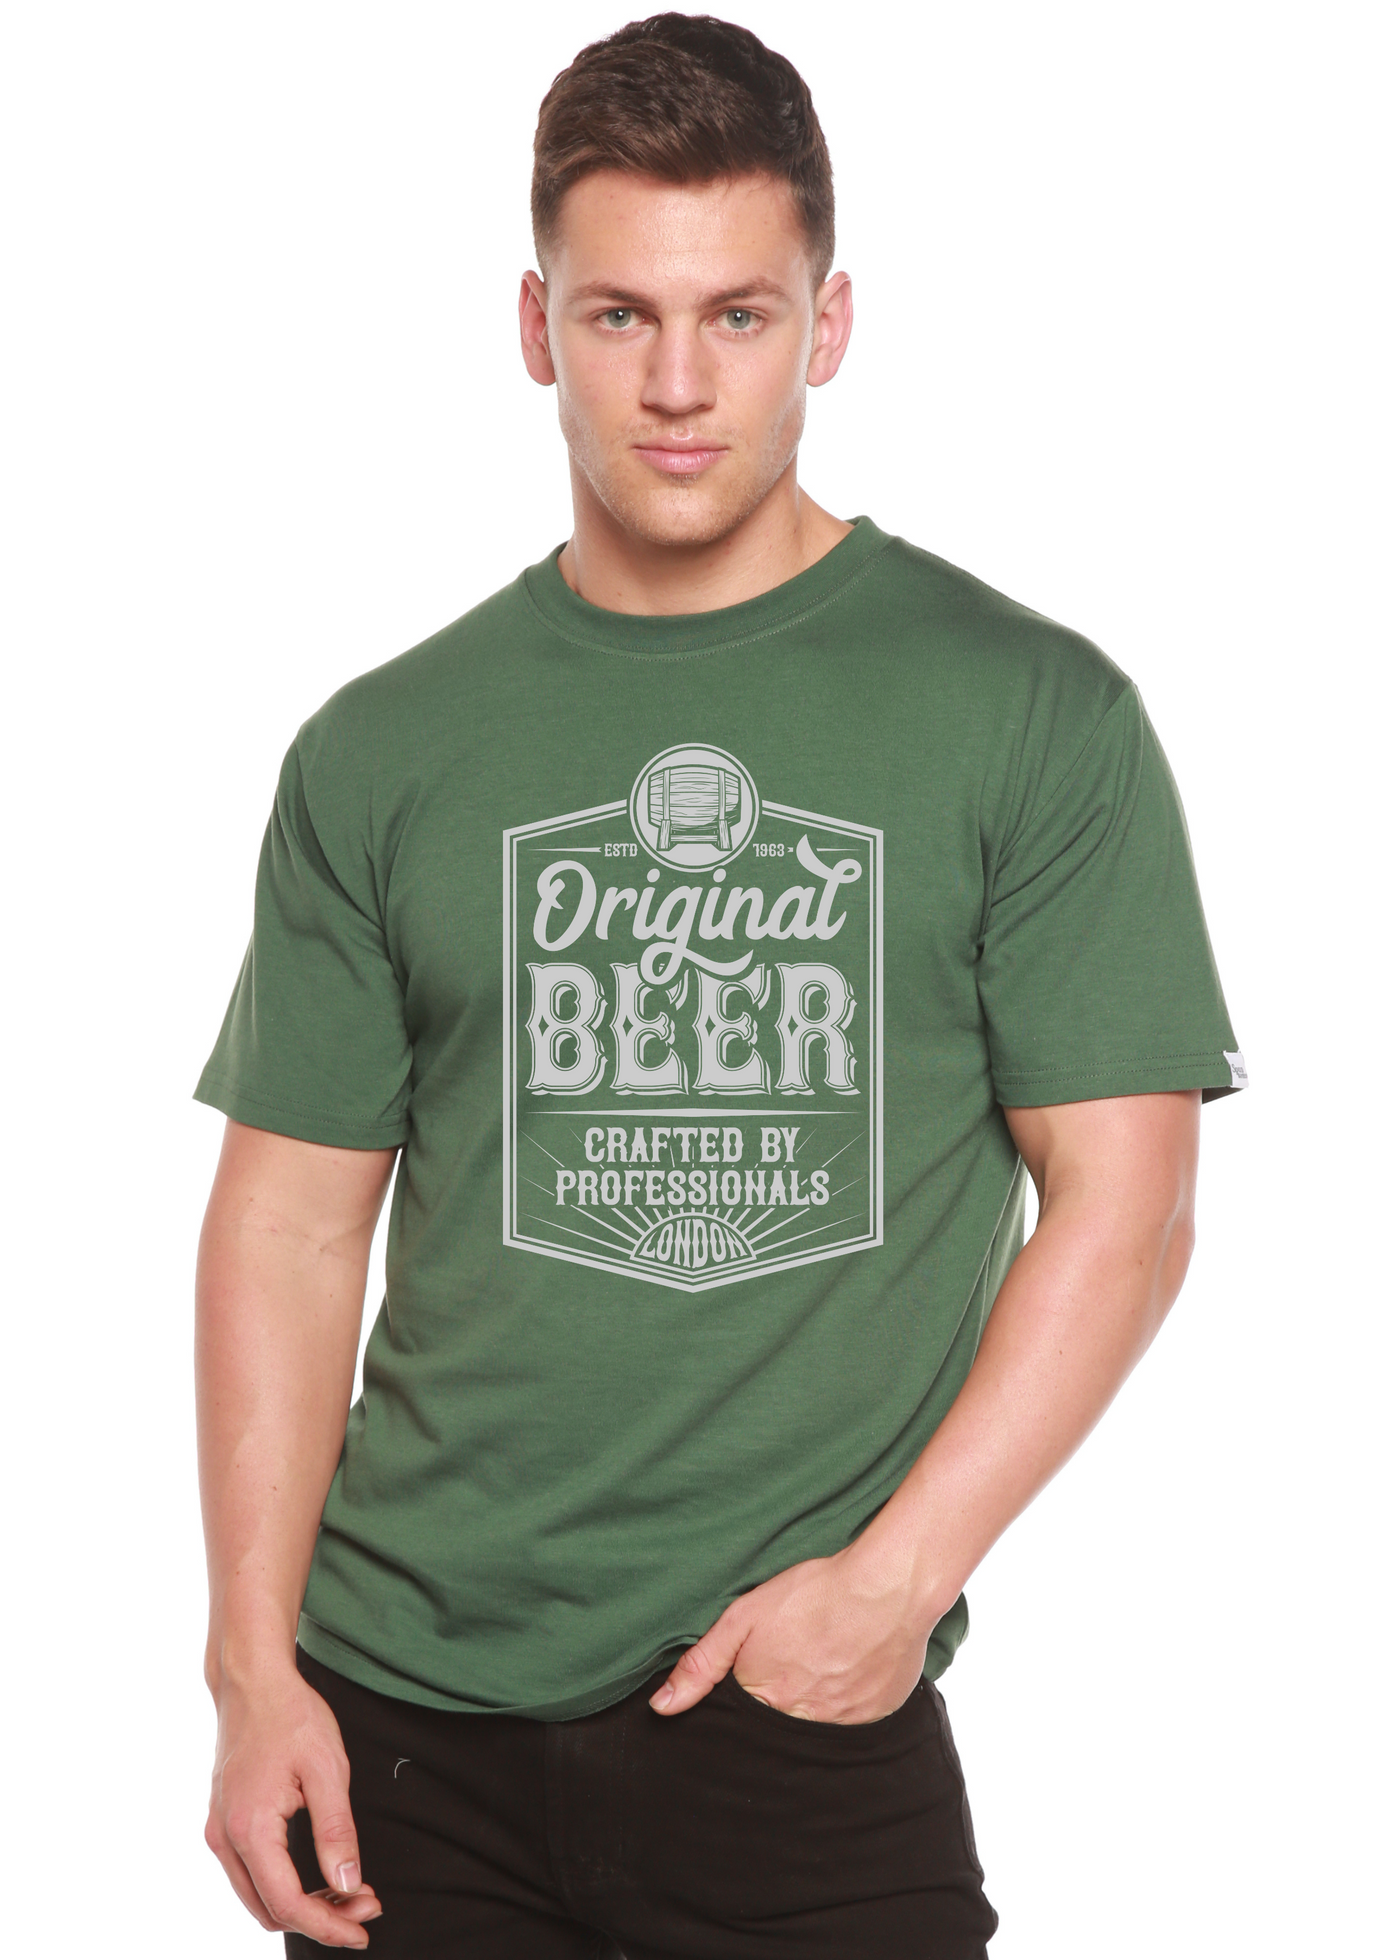 Original Beer men's bamboo tshirt pine green